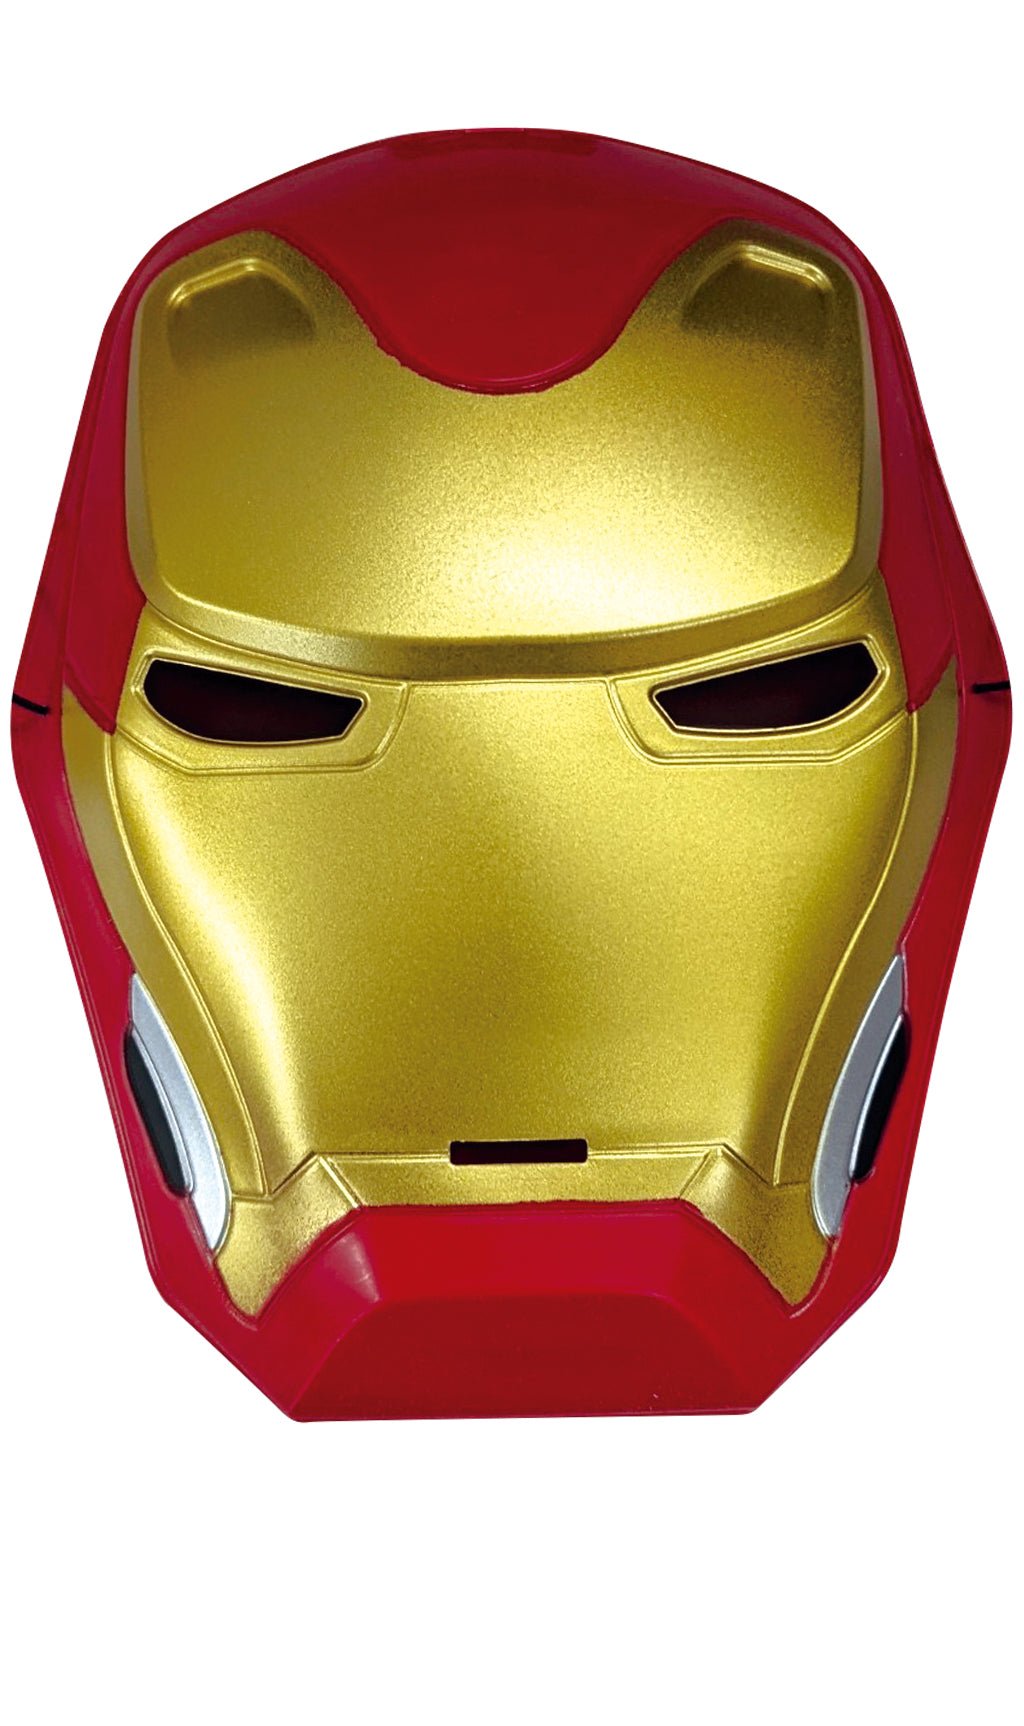 Máscara Iron Man Avengers infantil